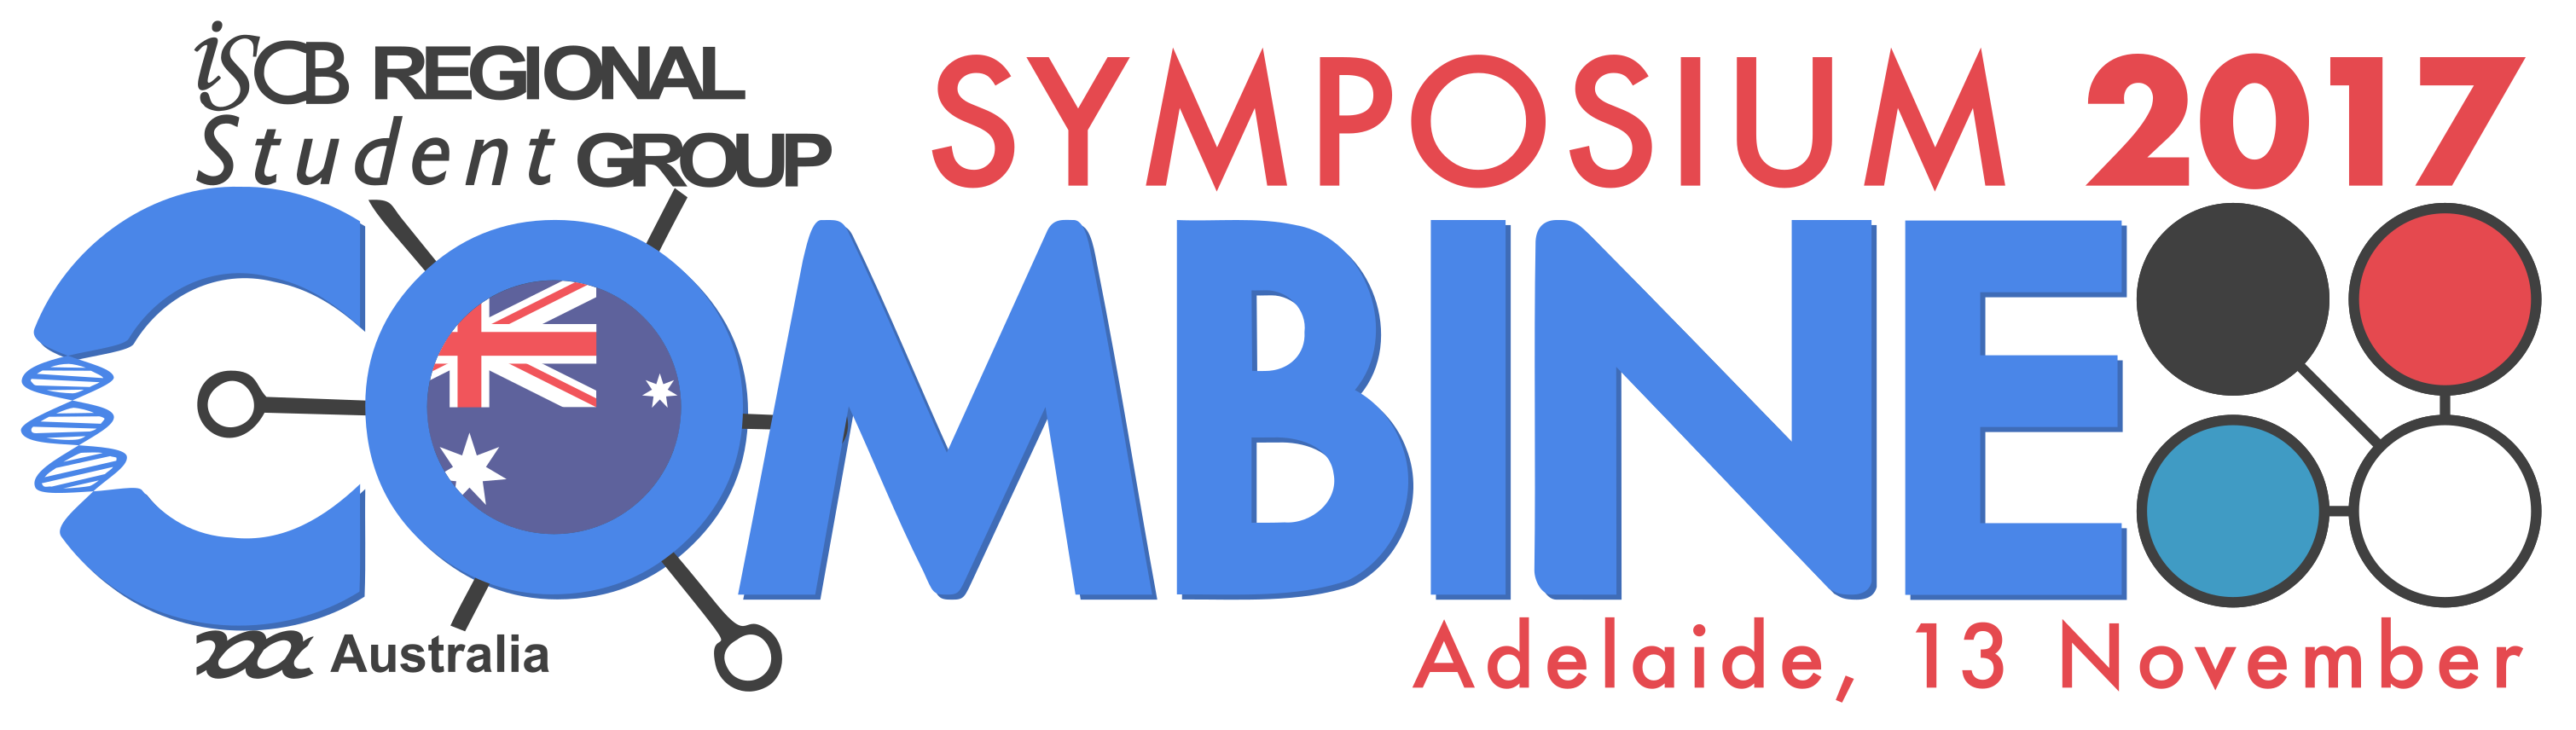 symposium_banner